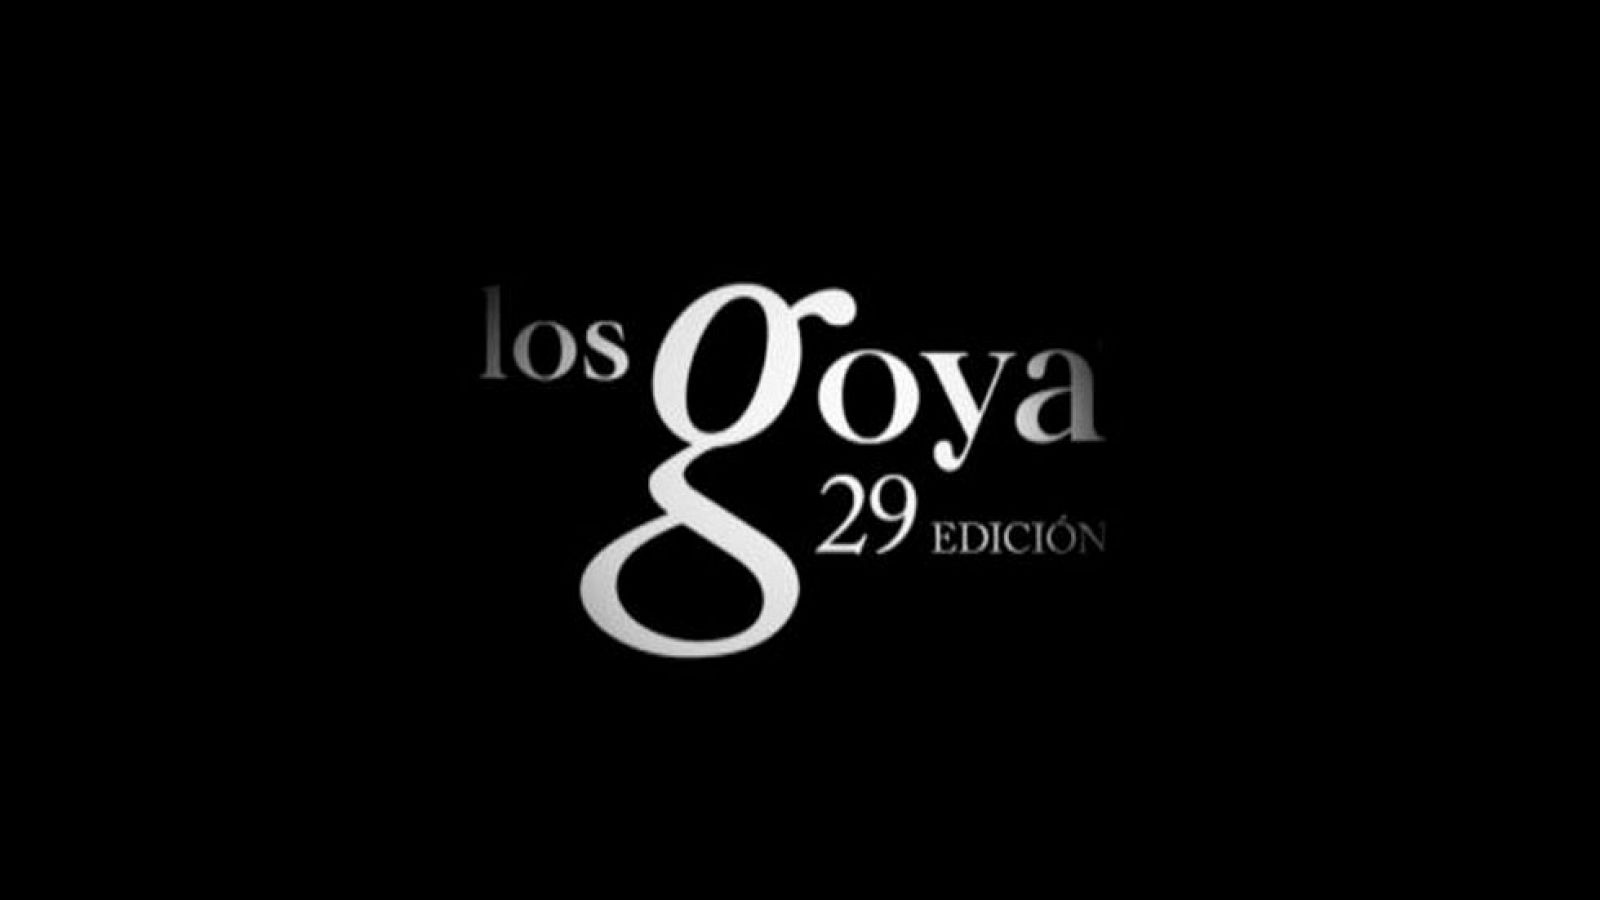 Premios Goya 2015, video promocional